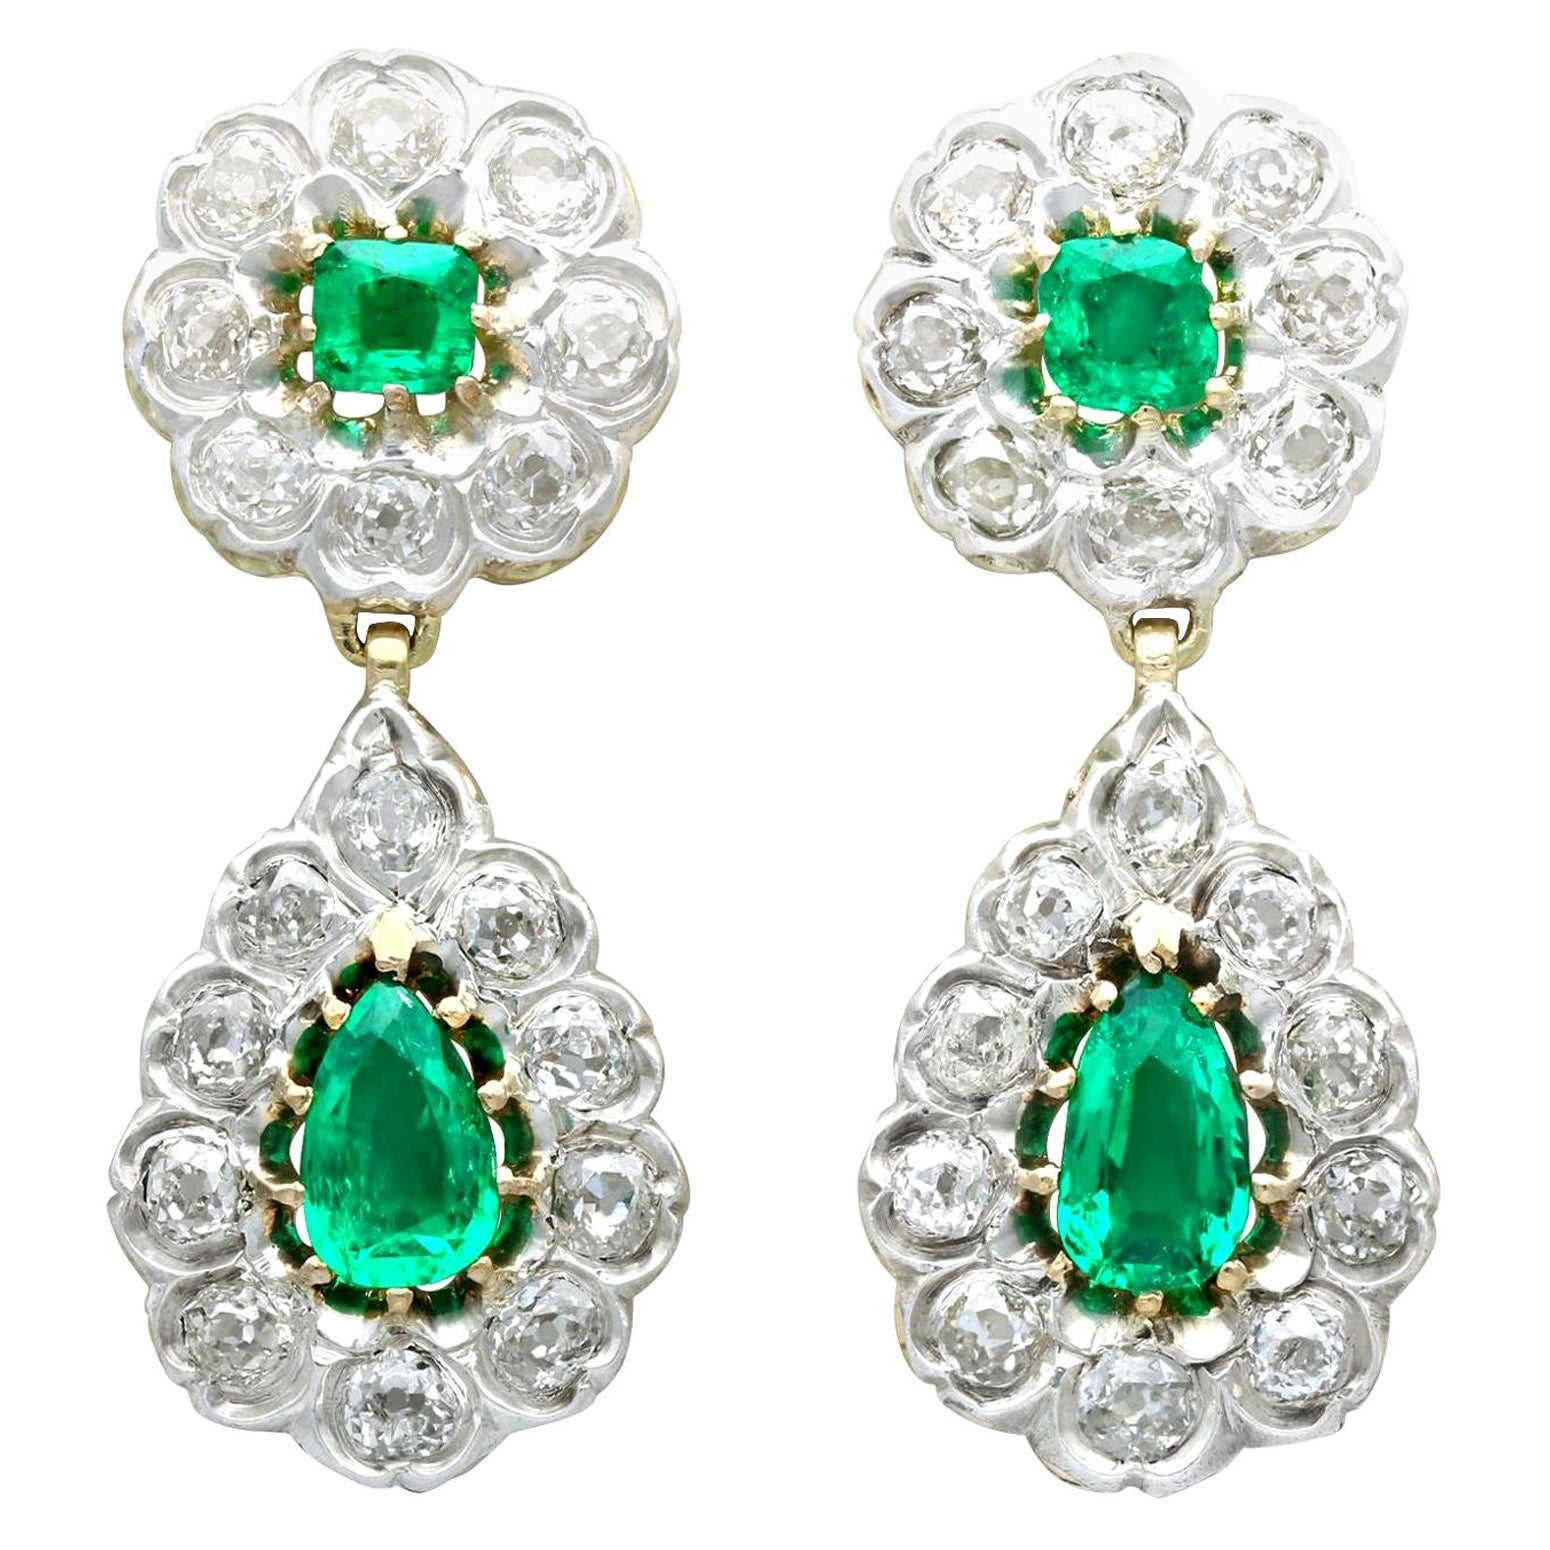 Antique Victorian 3.18 Carat Emerald and 3.23 Carat Diamond Drop Earrings